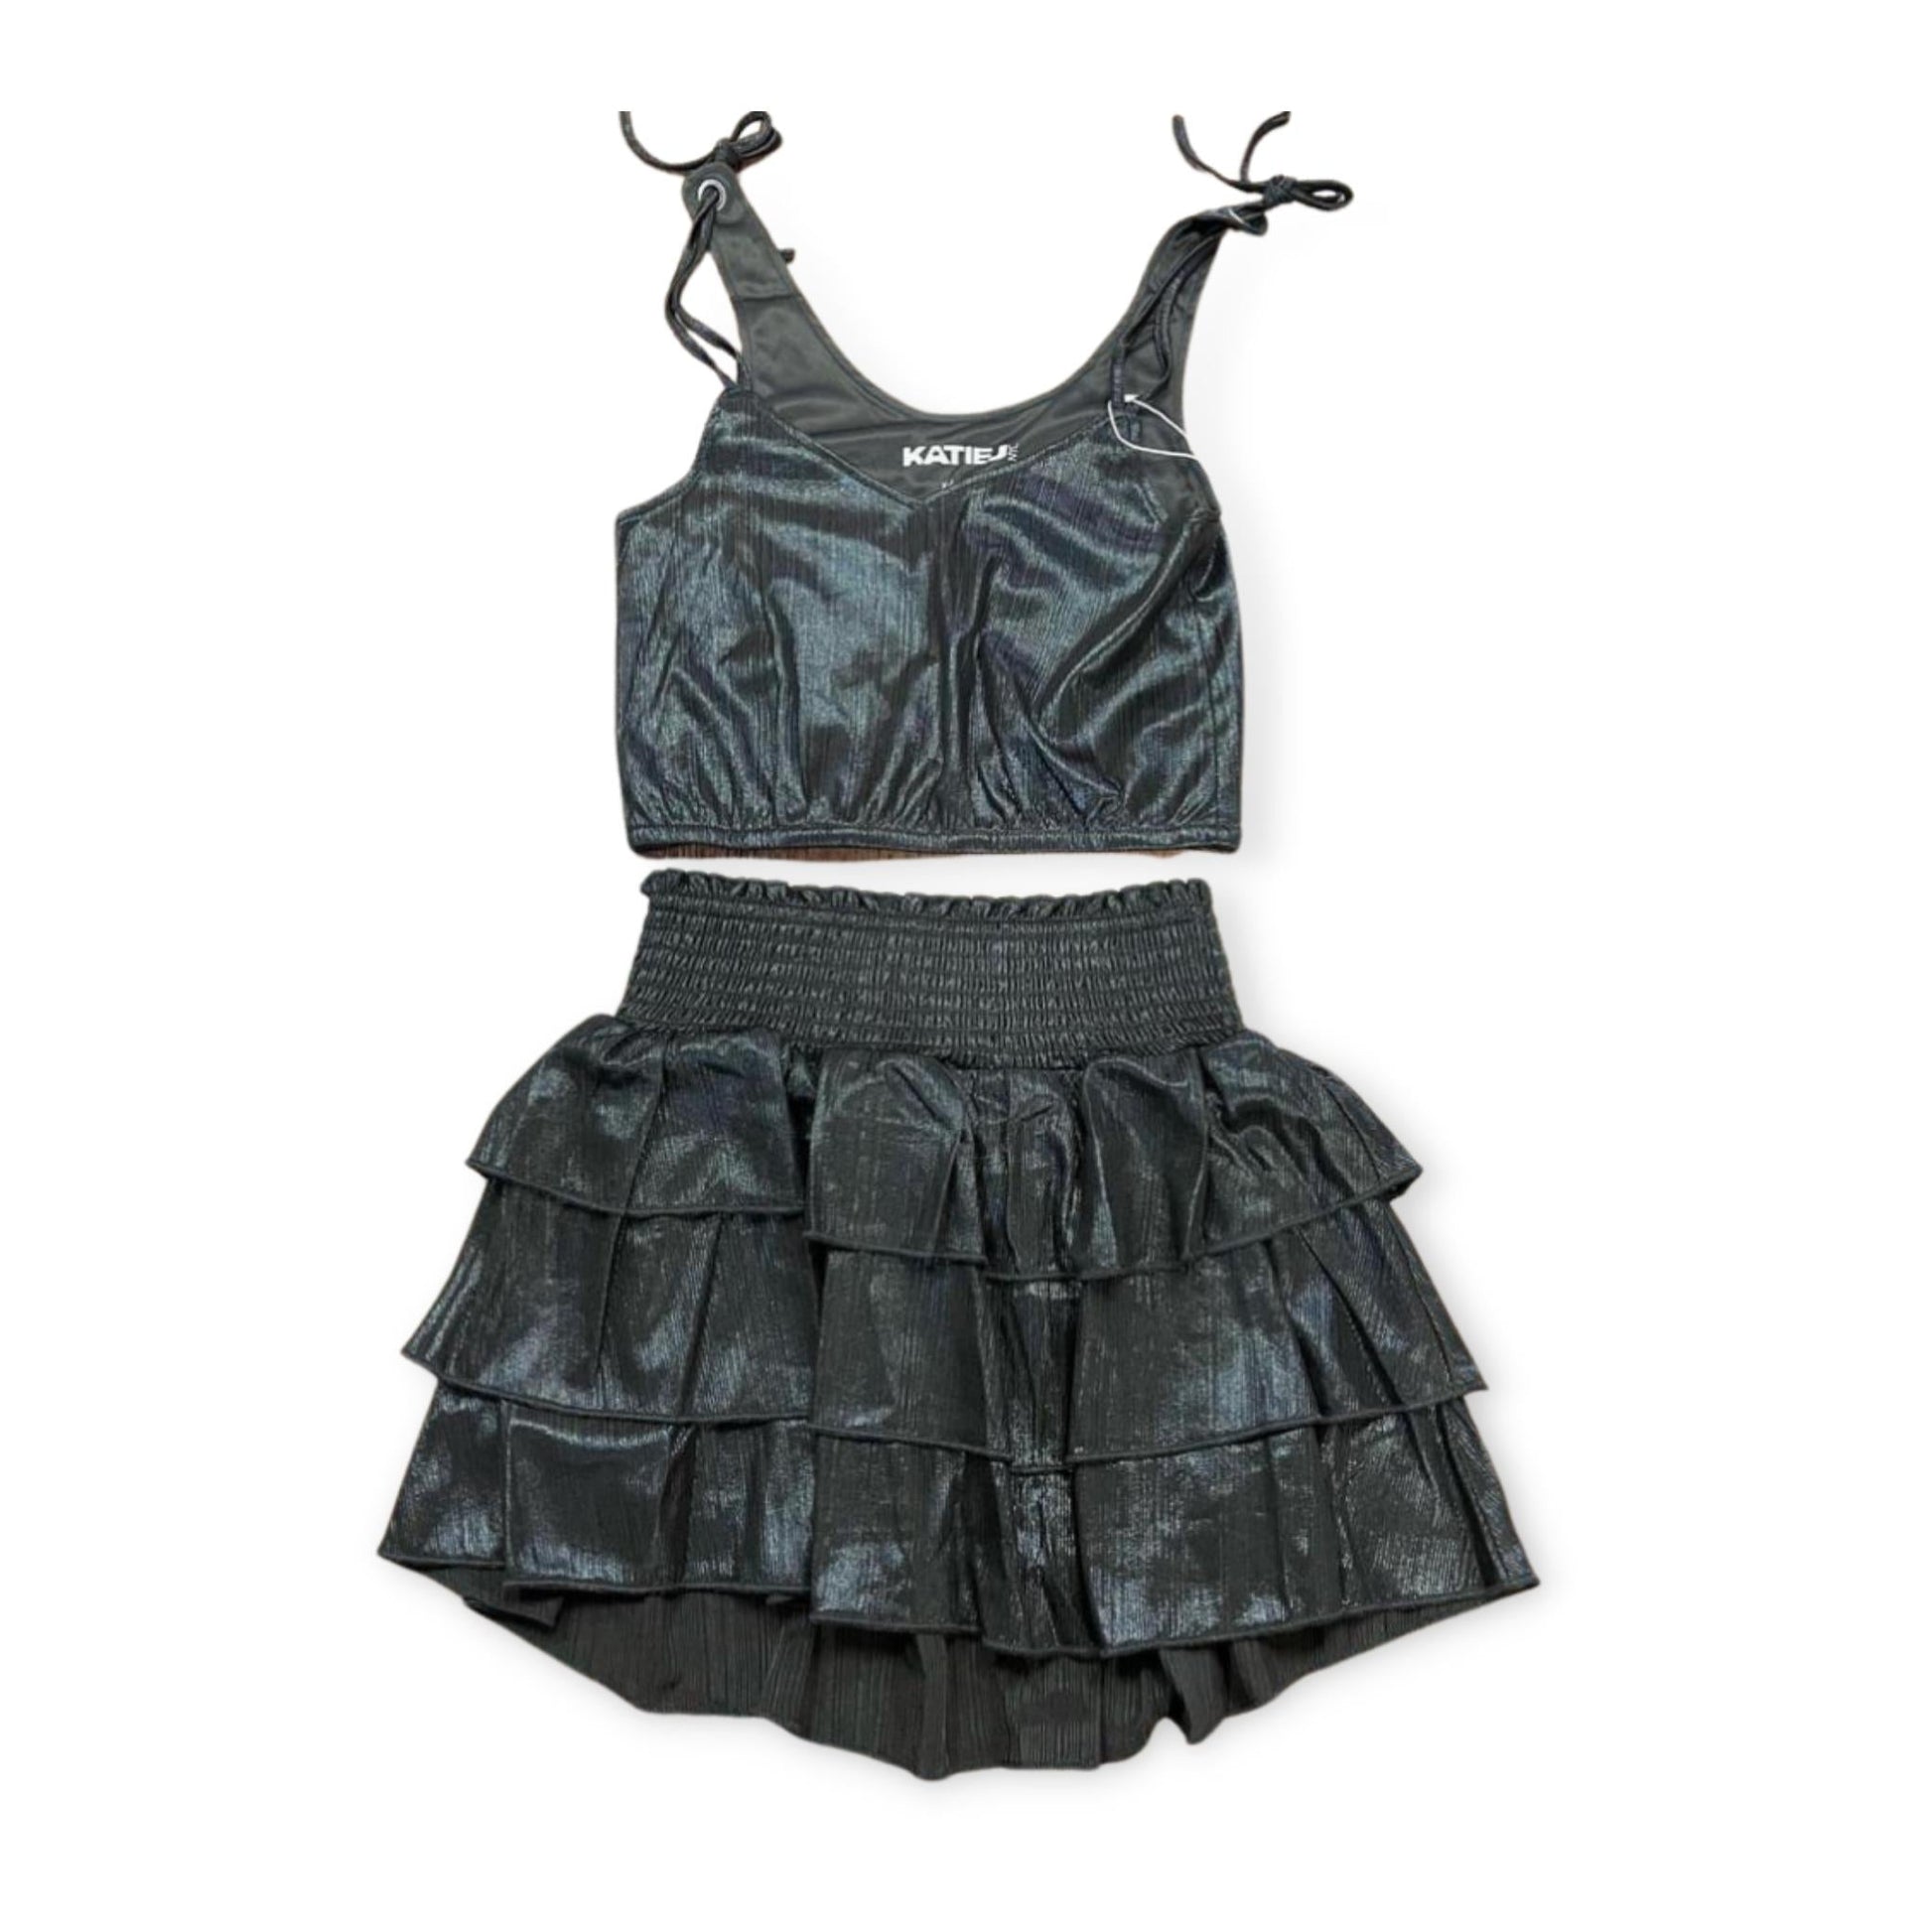 KatieJNYC Metallic Black Alison Ruffle Skirt - a Spirit Animal - Skirt $60-$90 active Aug 2022 black